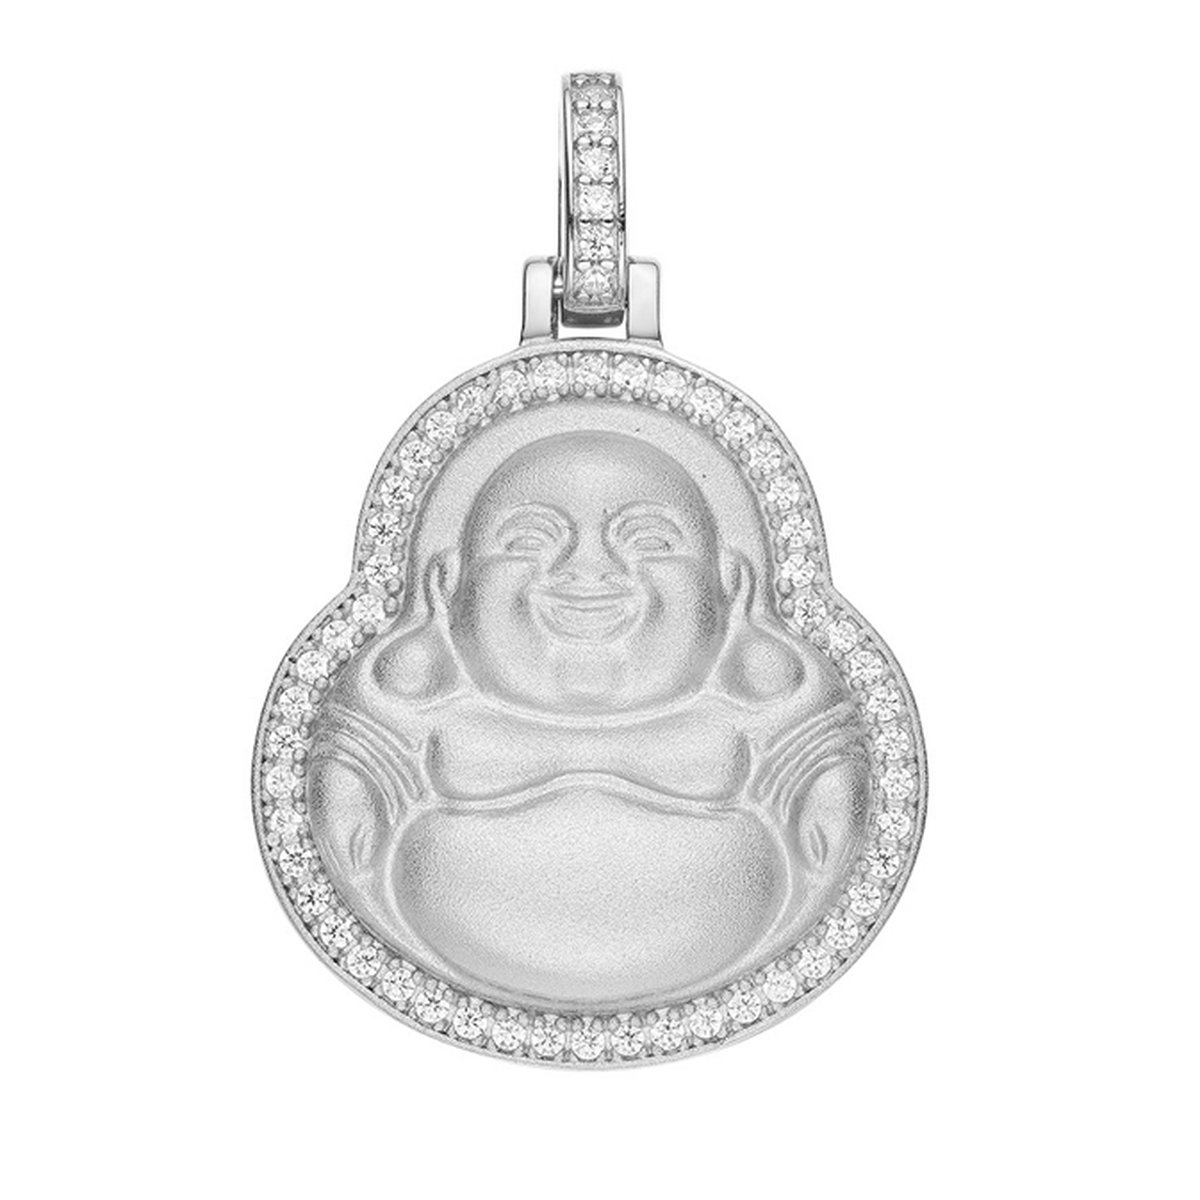 Juwelier Zwartevalk zilveren (gerhodineerd) boeddha hanger - 24.231